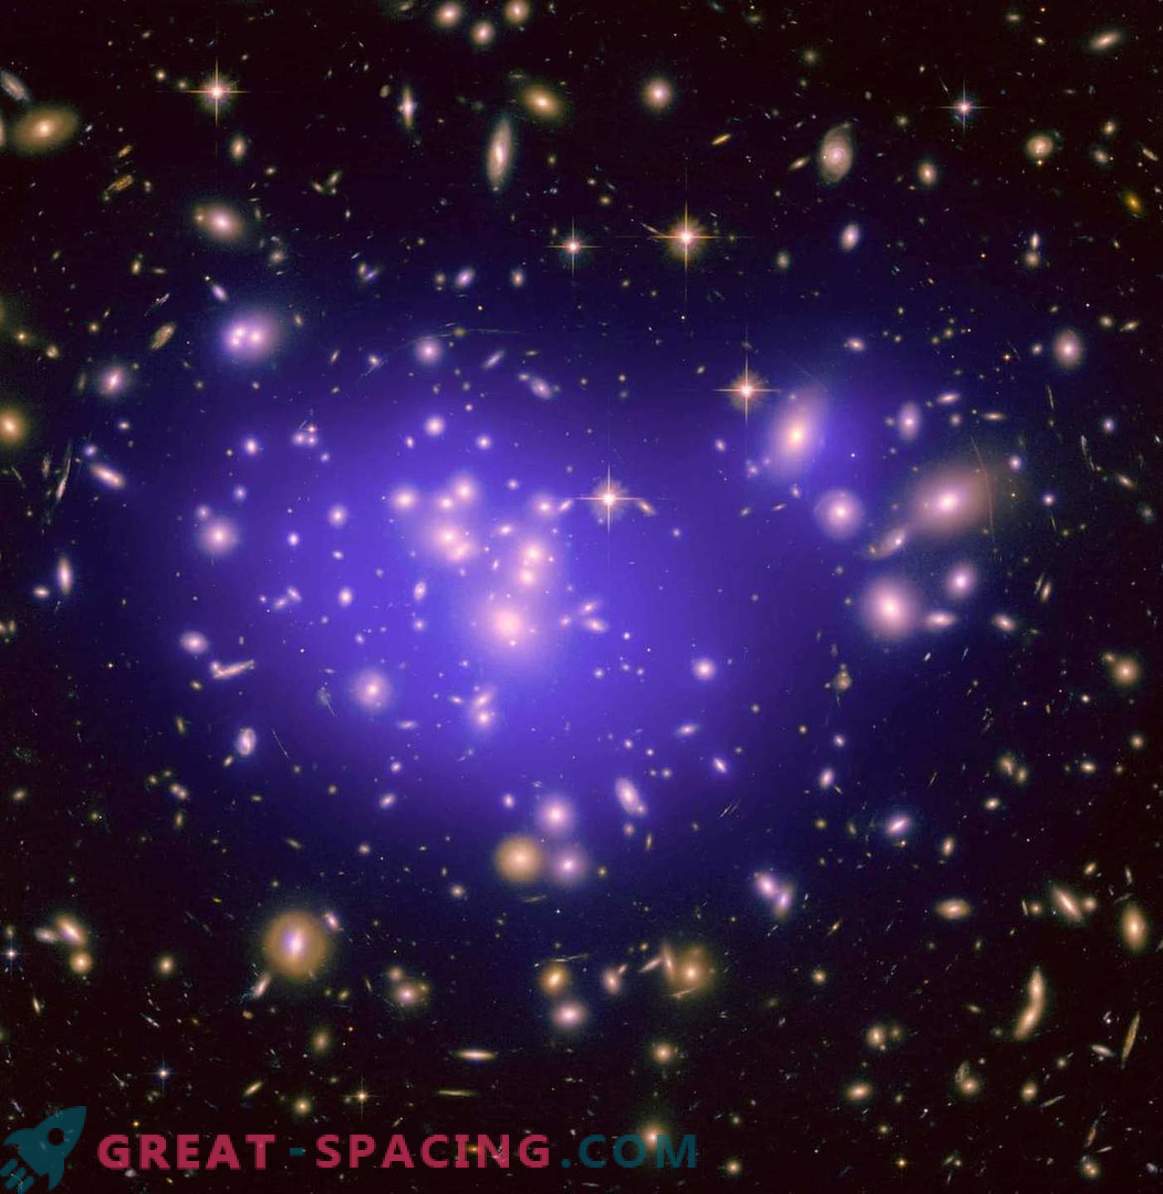 What originated earlier: galaxies or black holes